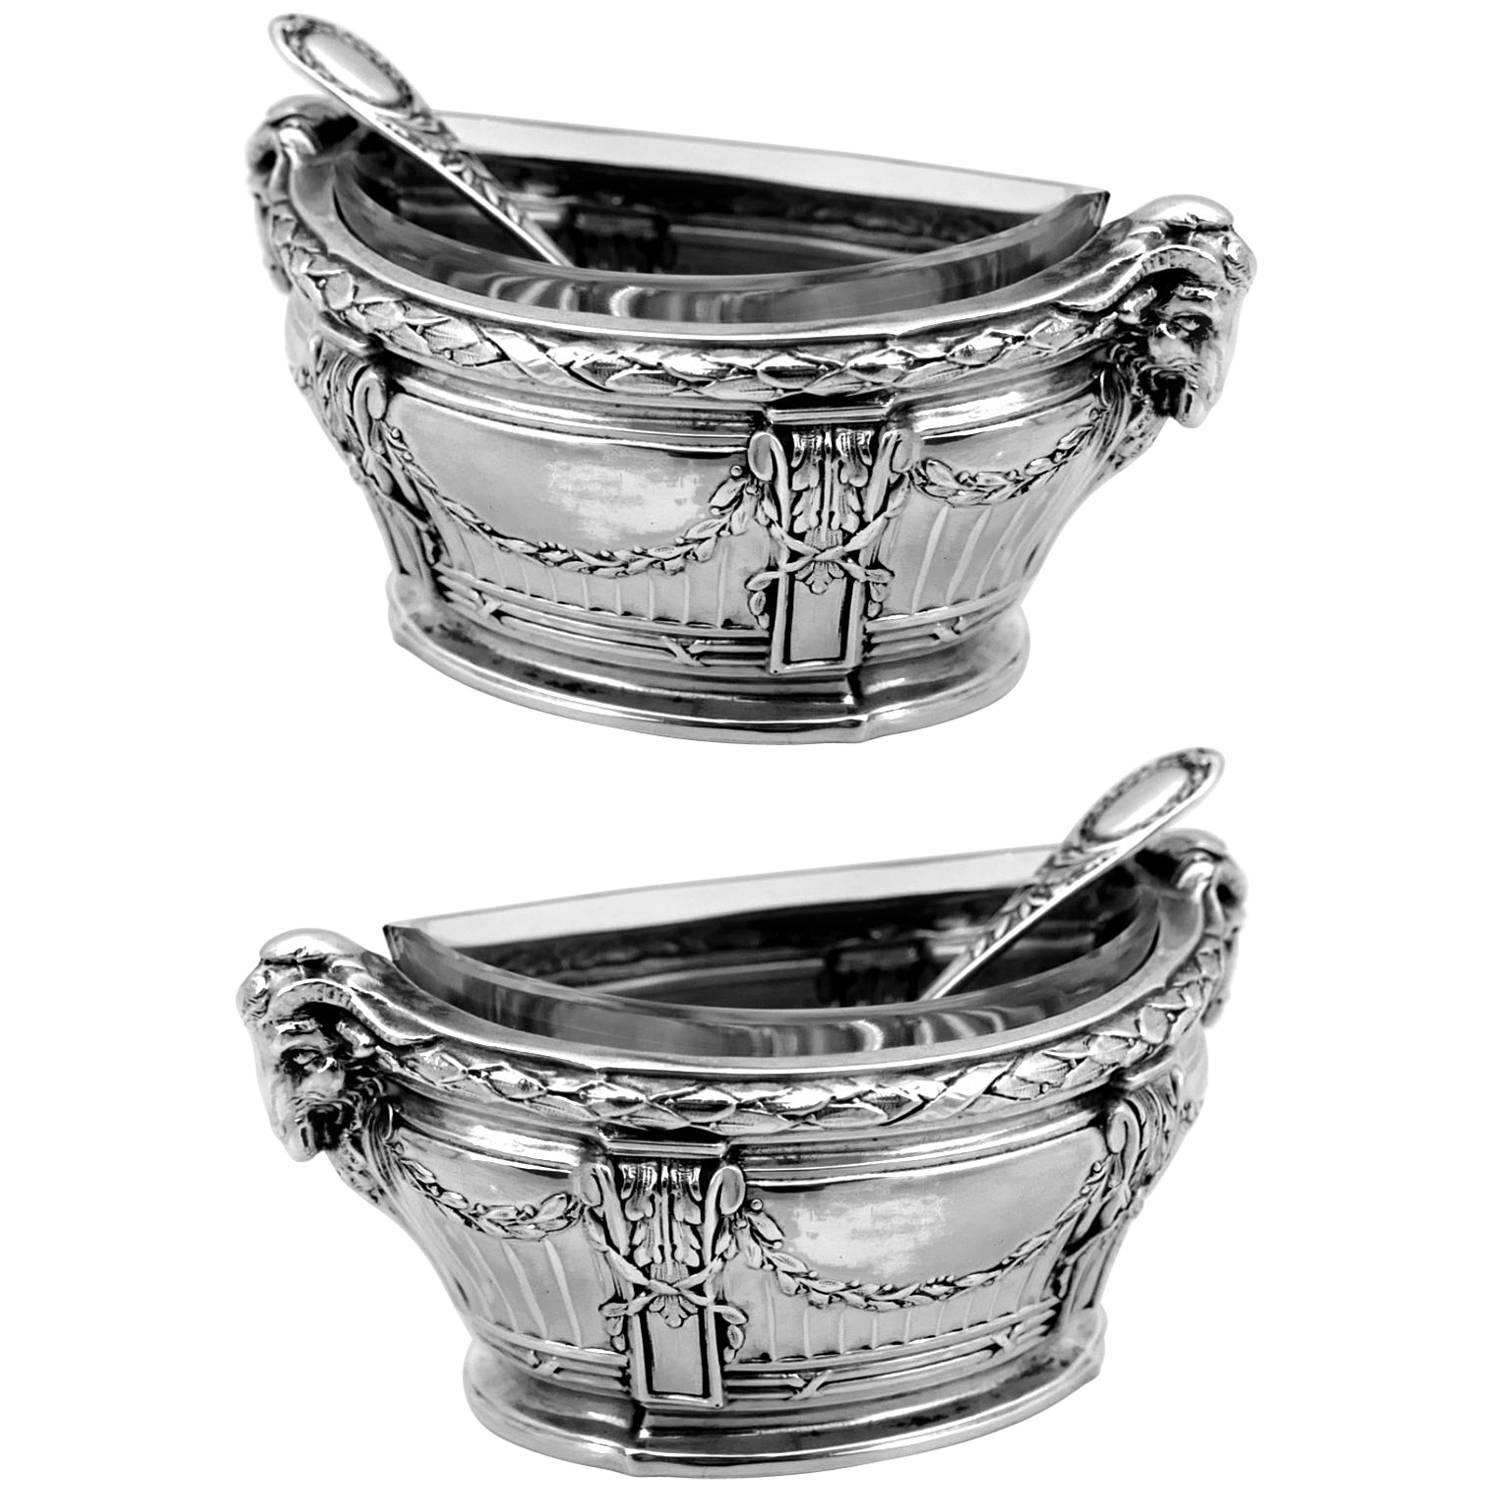 Puiforcat Masterpiece French Sterling Silver Salt Cellars Pair Spoons Ram's Head